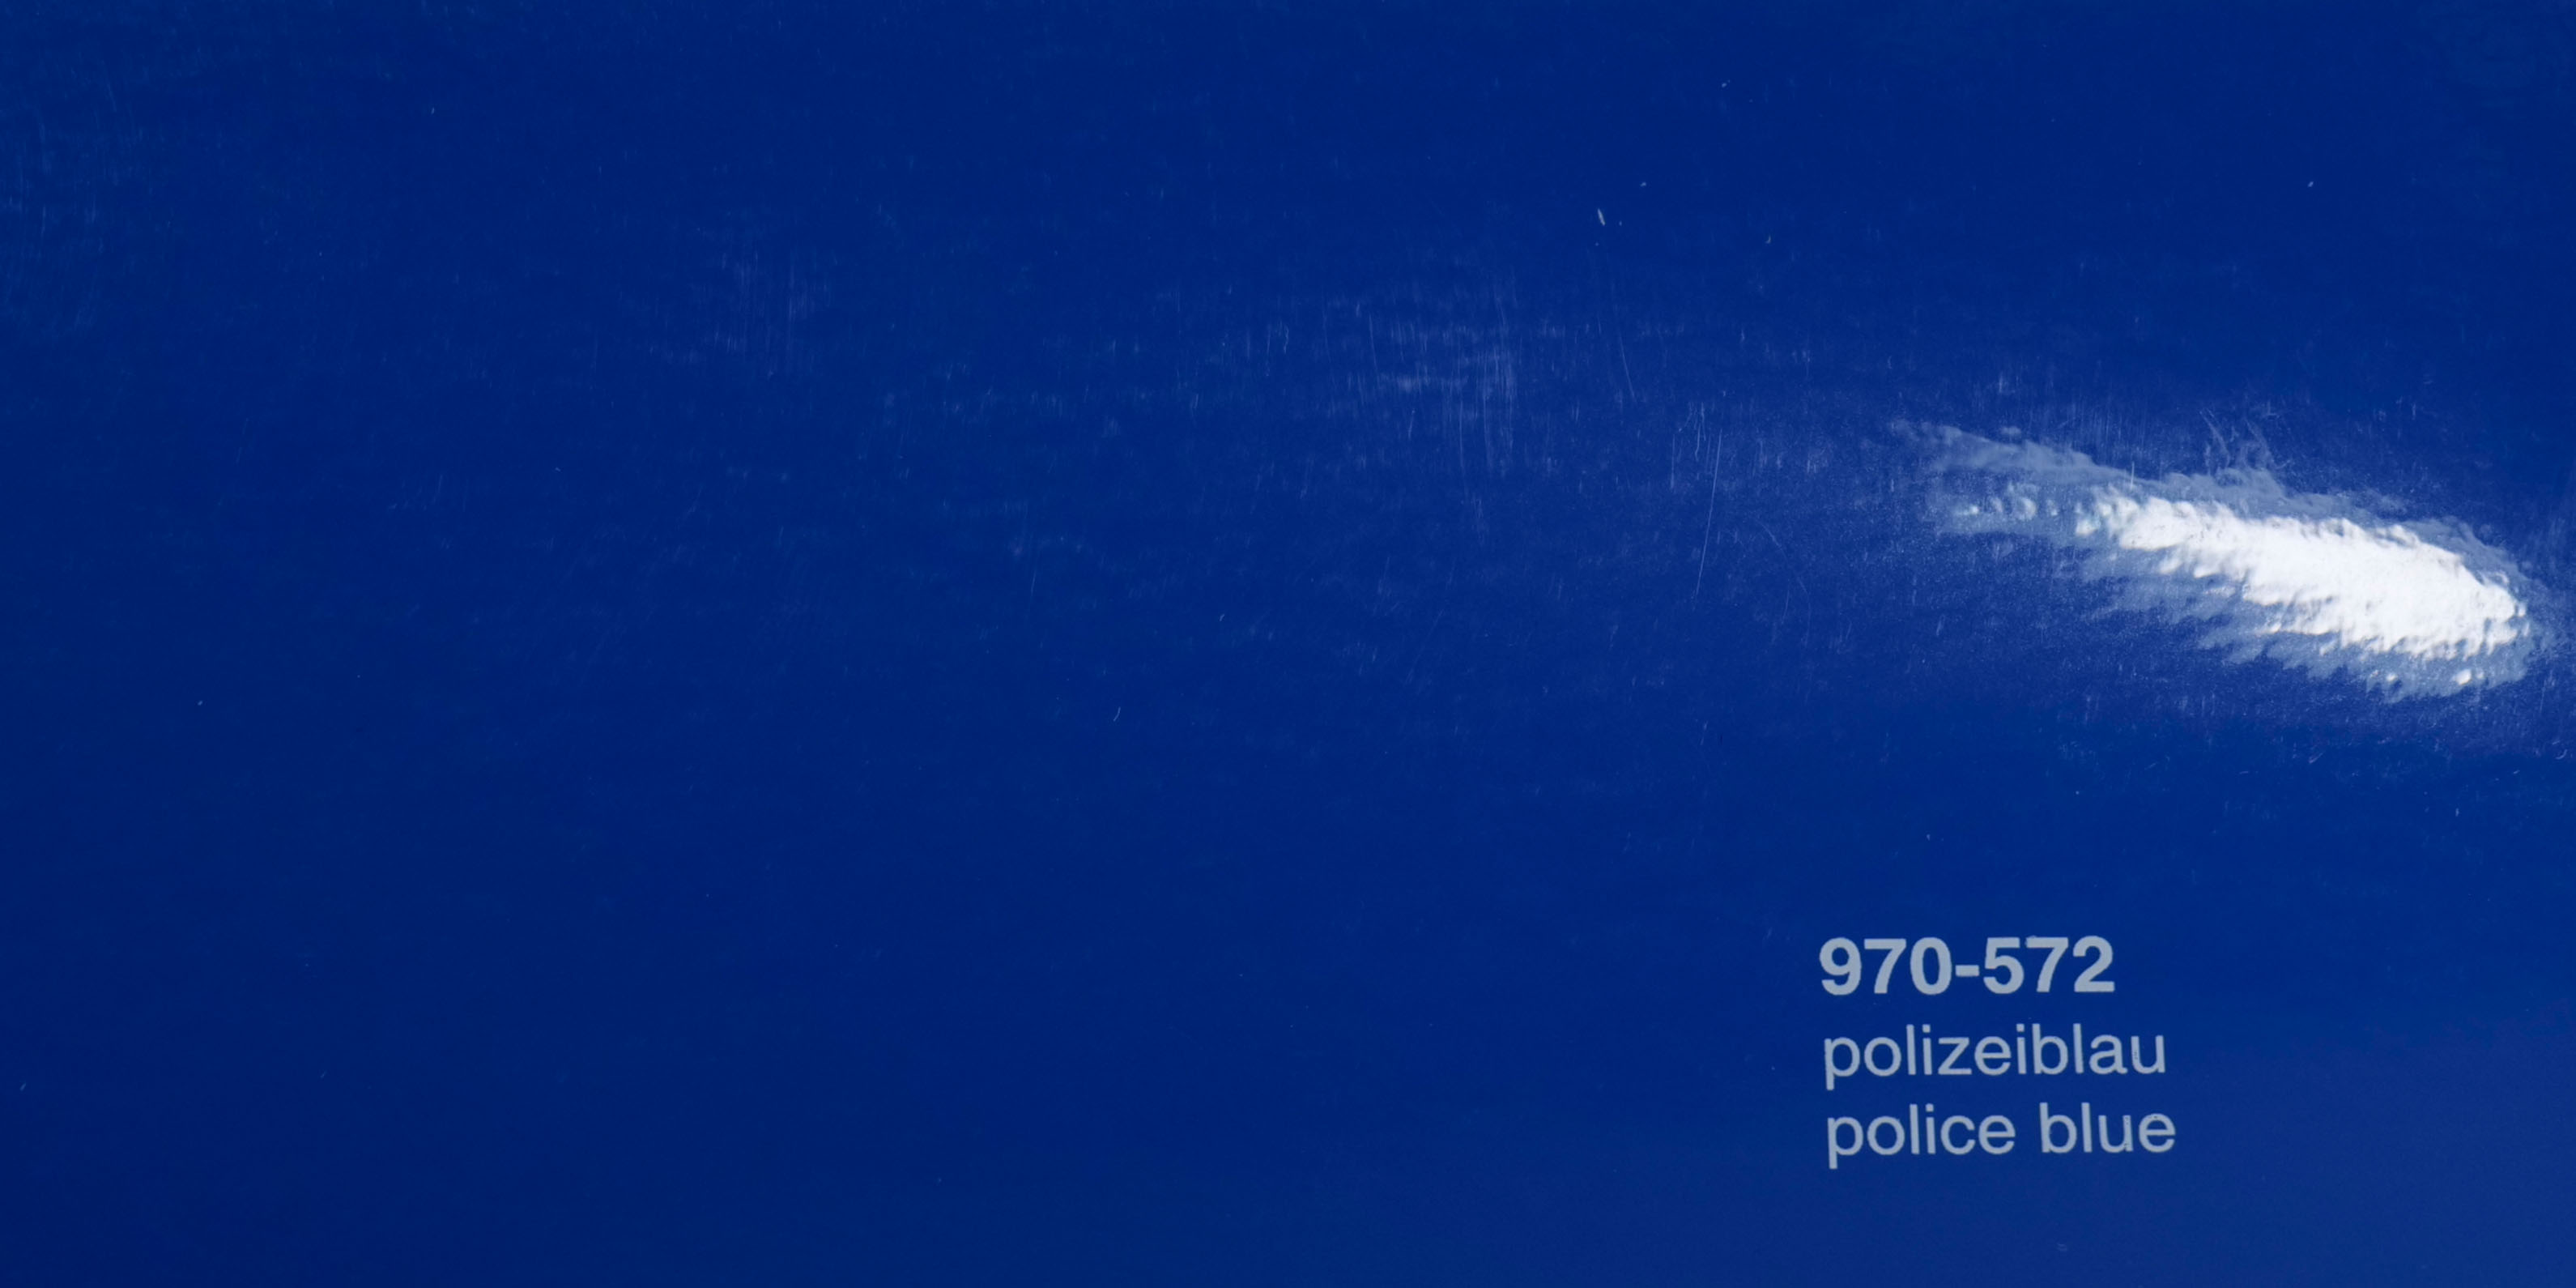 Oracal 970RA - 572 Polizeiblau Glanz